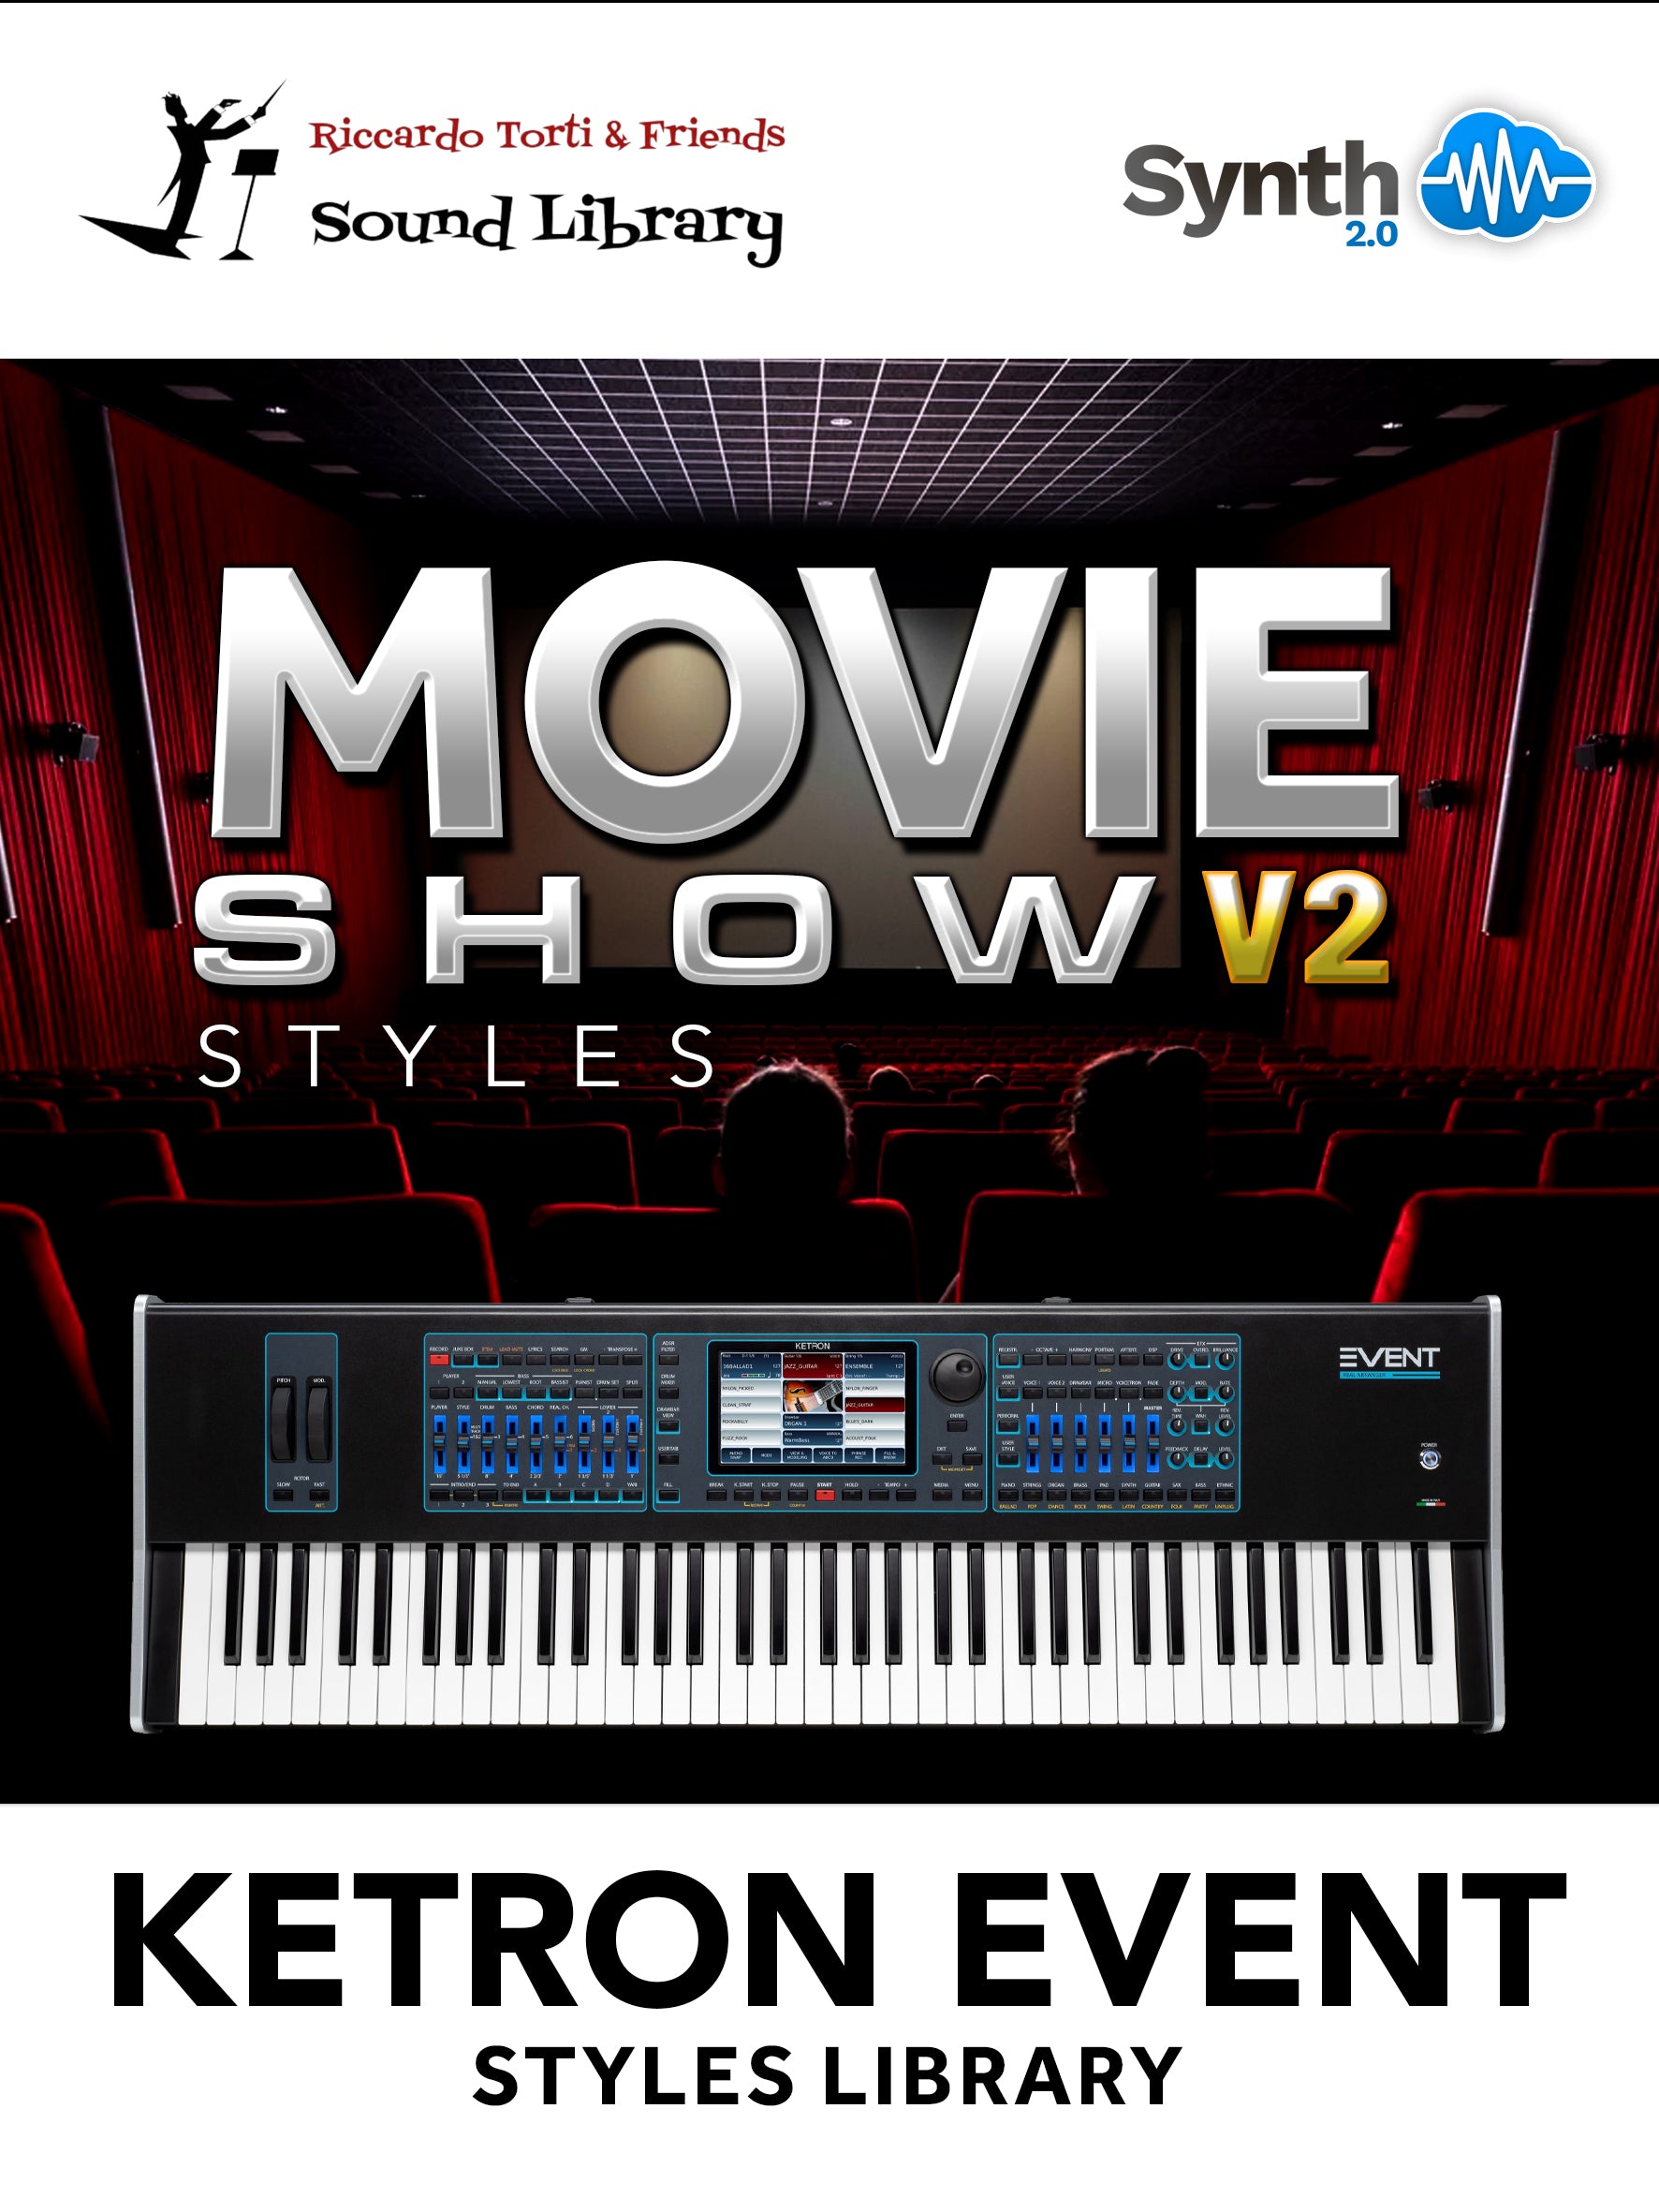 EVS002 - Movie Show V2 - Ketron Event ( 8 new styles )